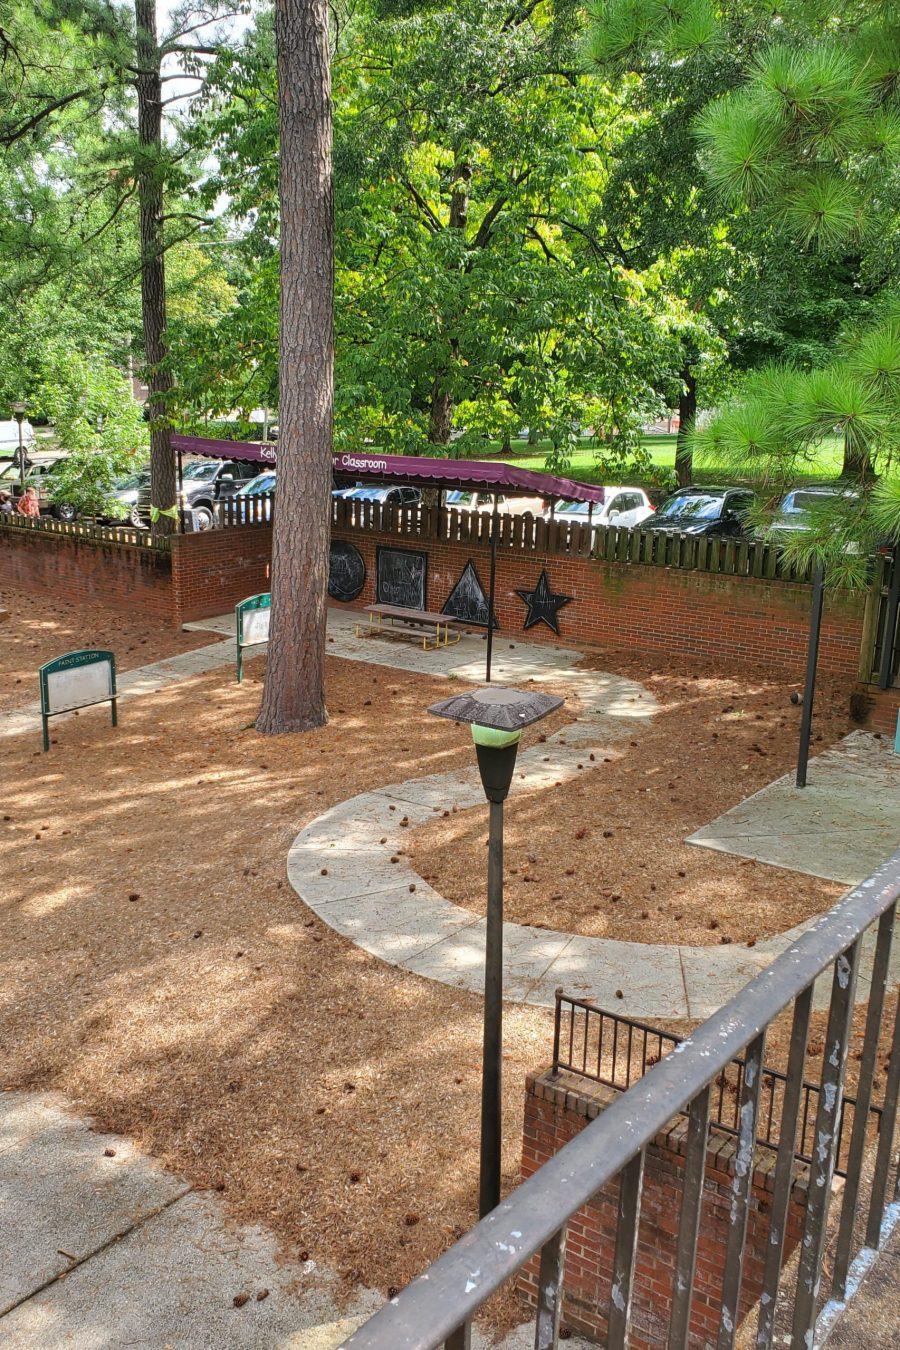 The Susan Gray School - playground area